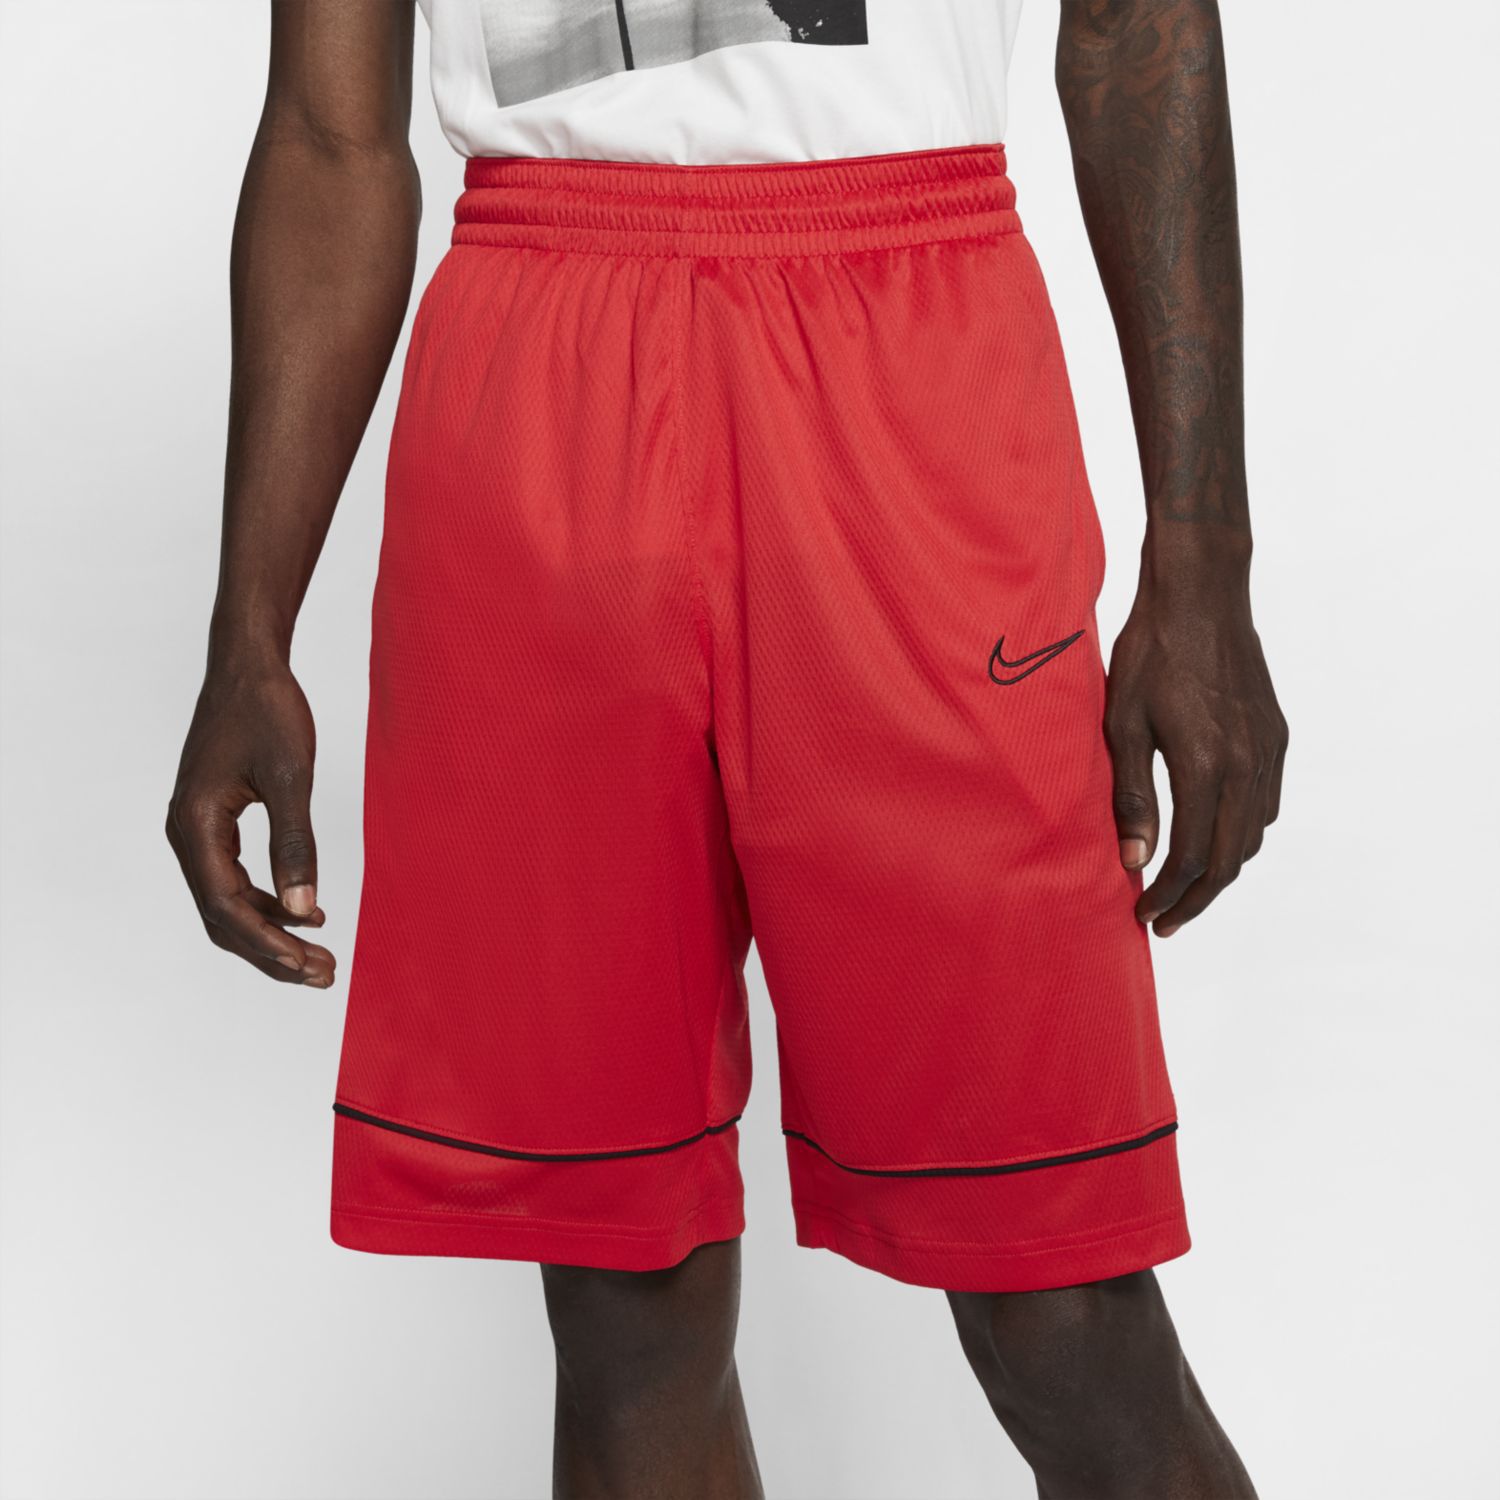 Big \u0026 Tall Nike Basketball Shorts